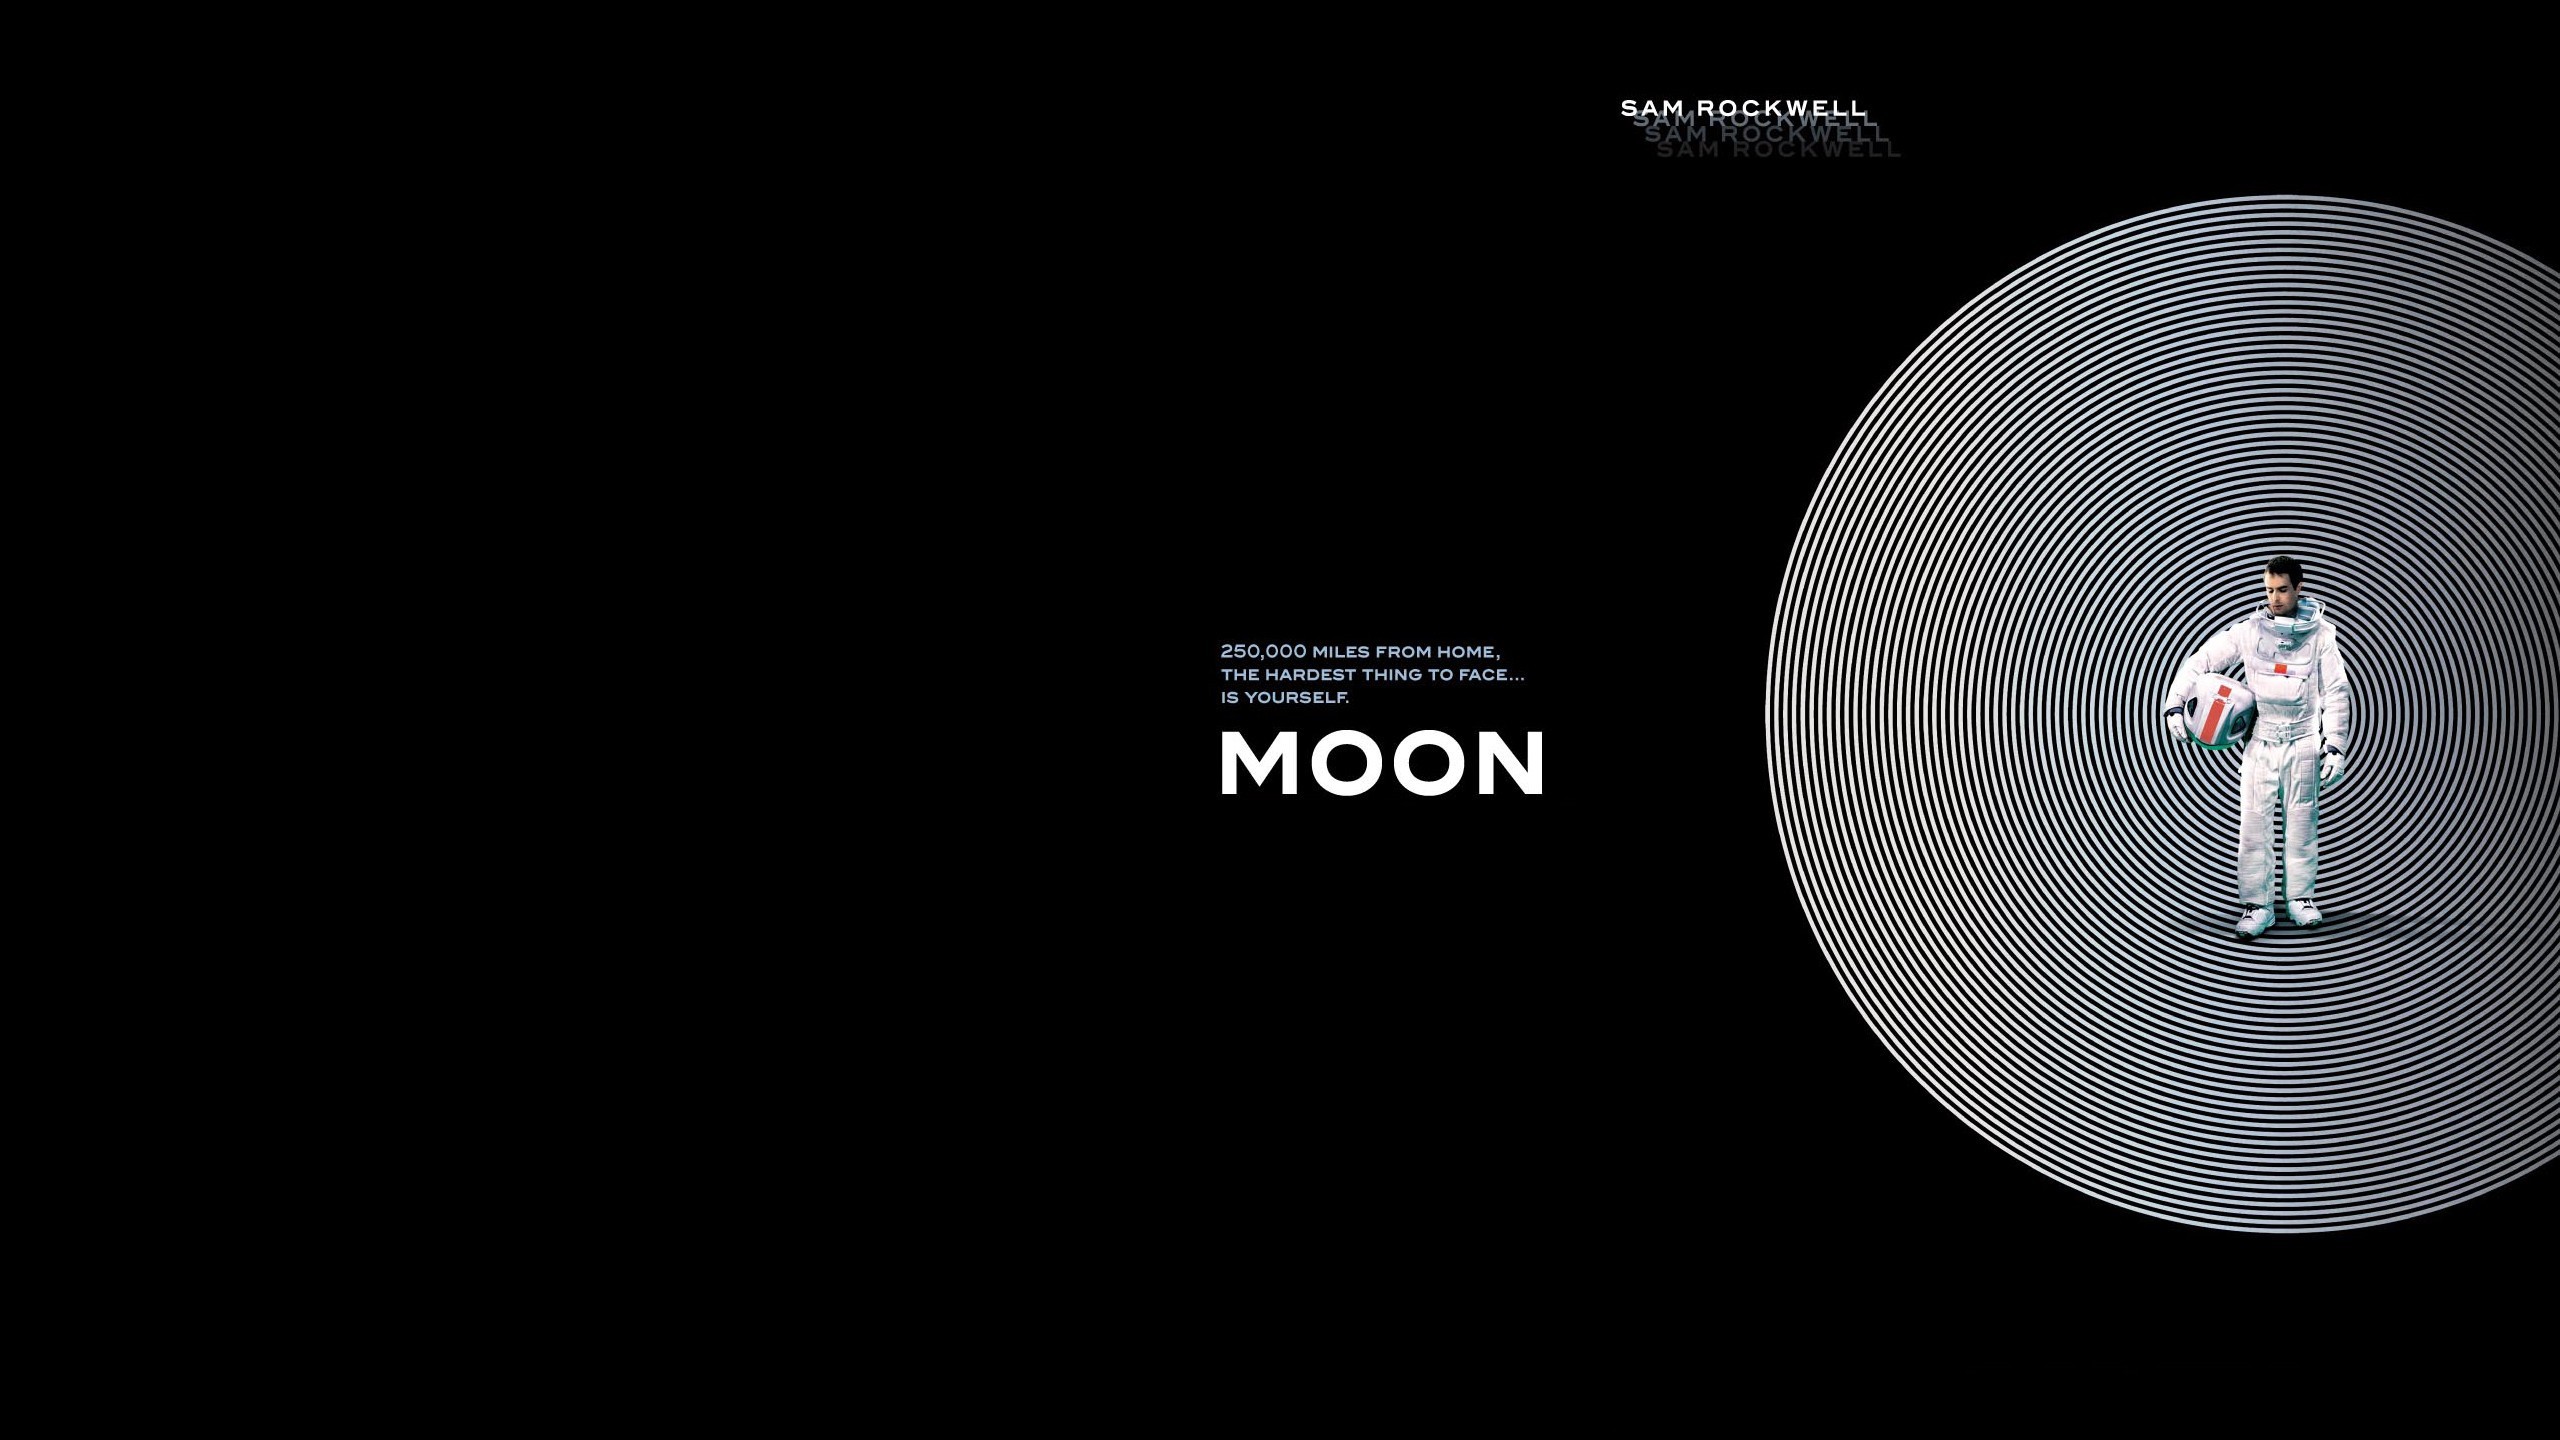 moon movie sam rockwell